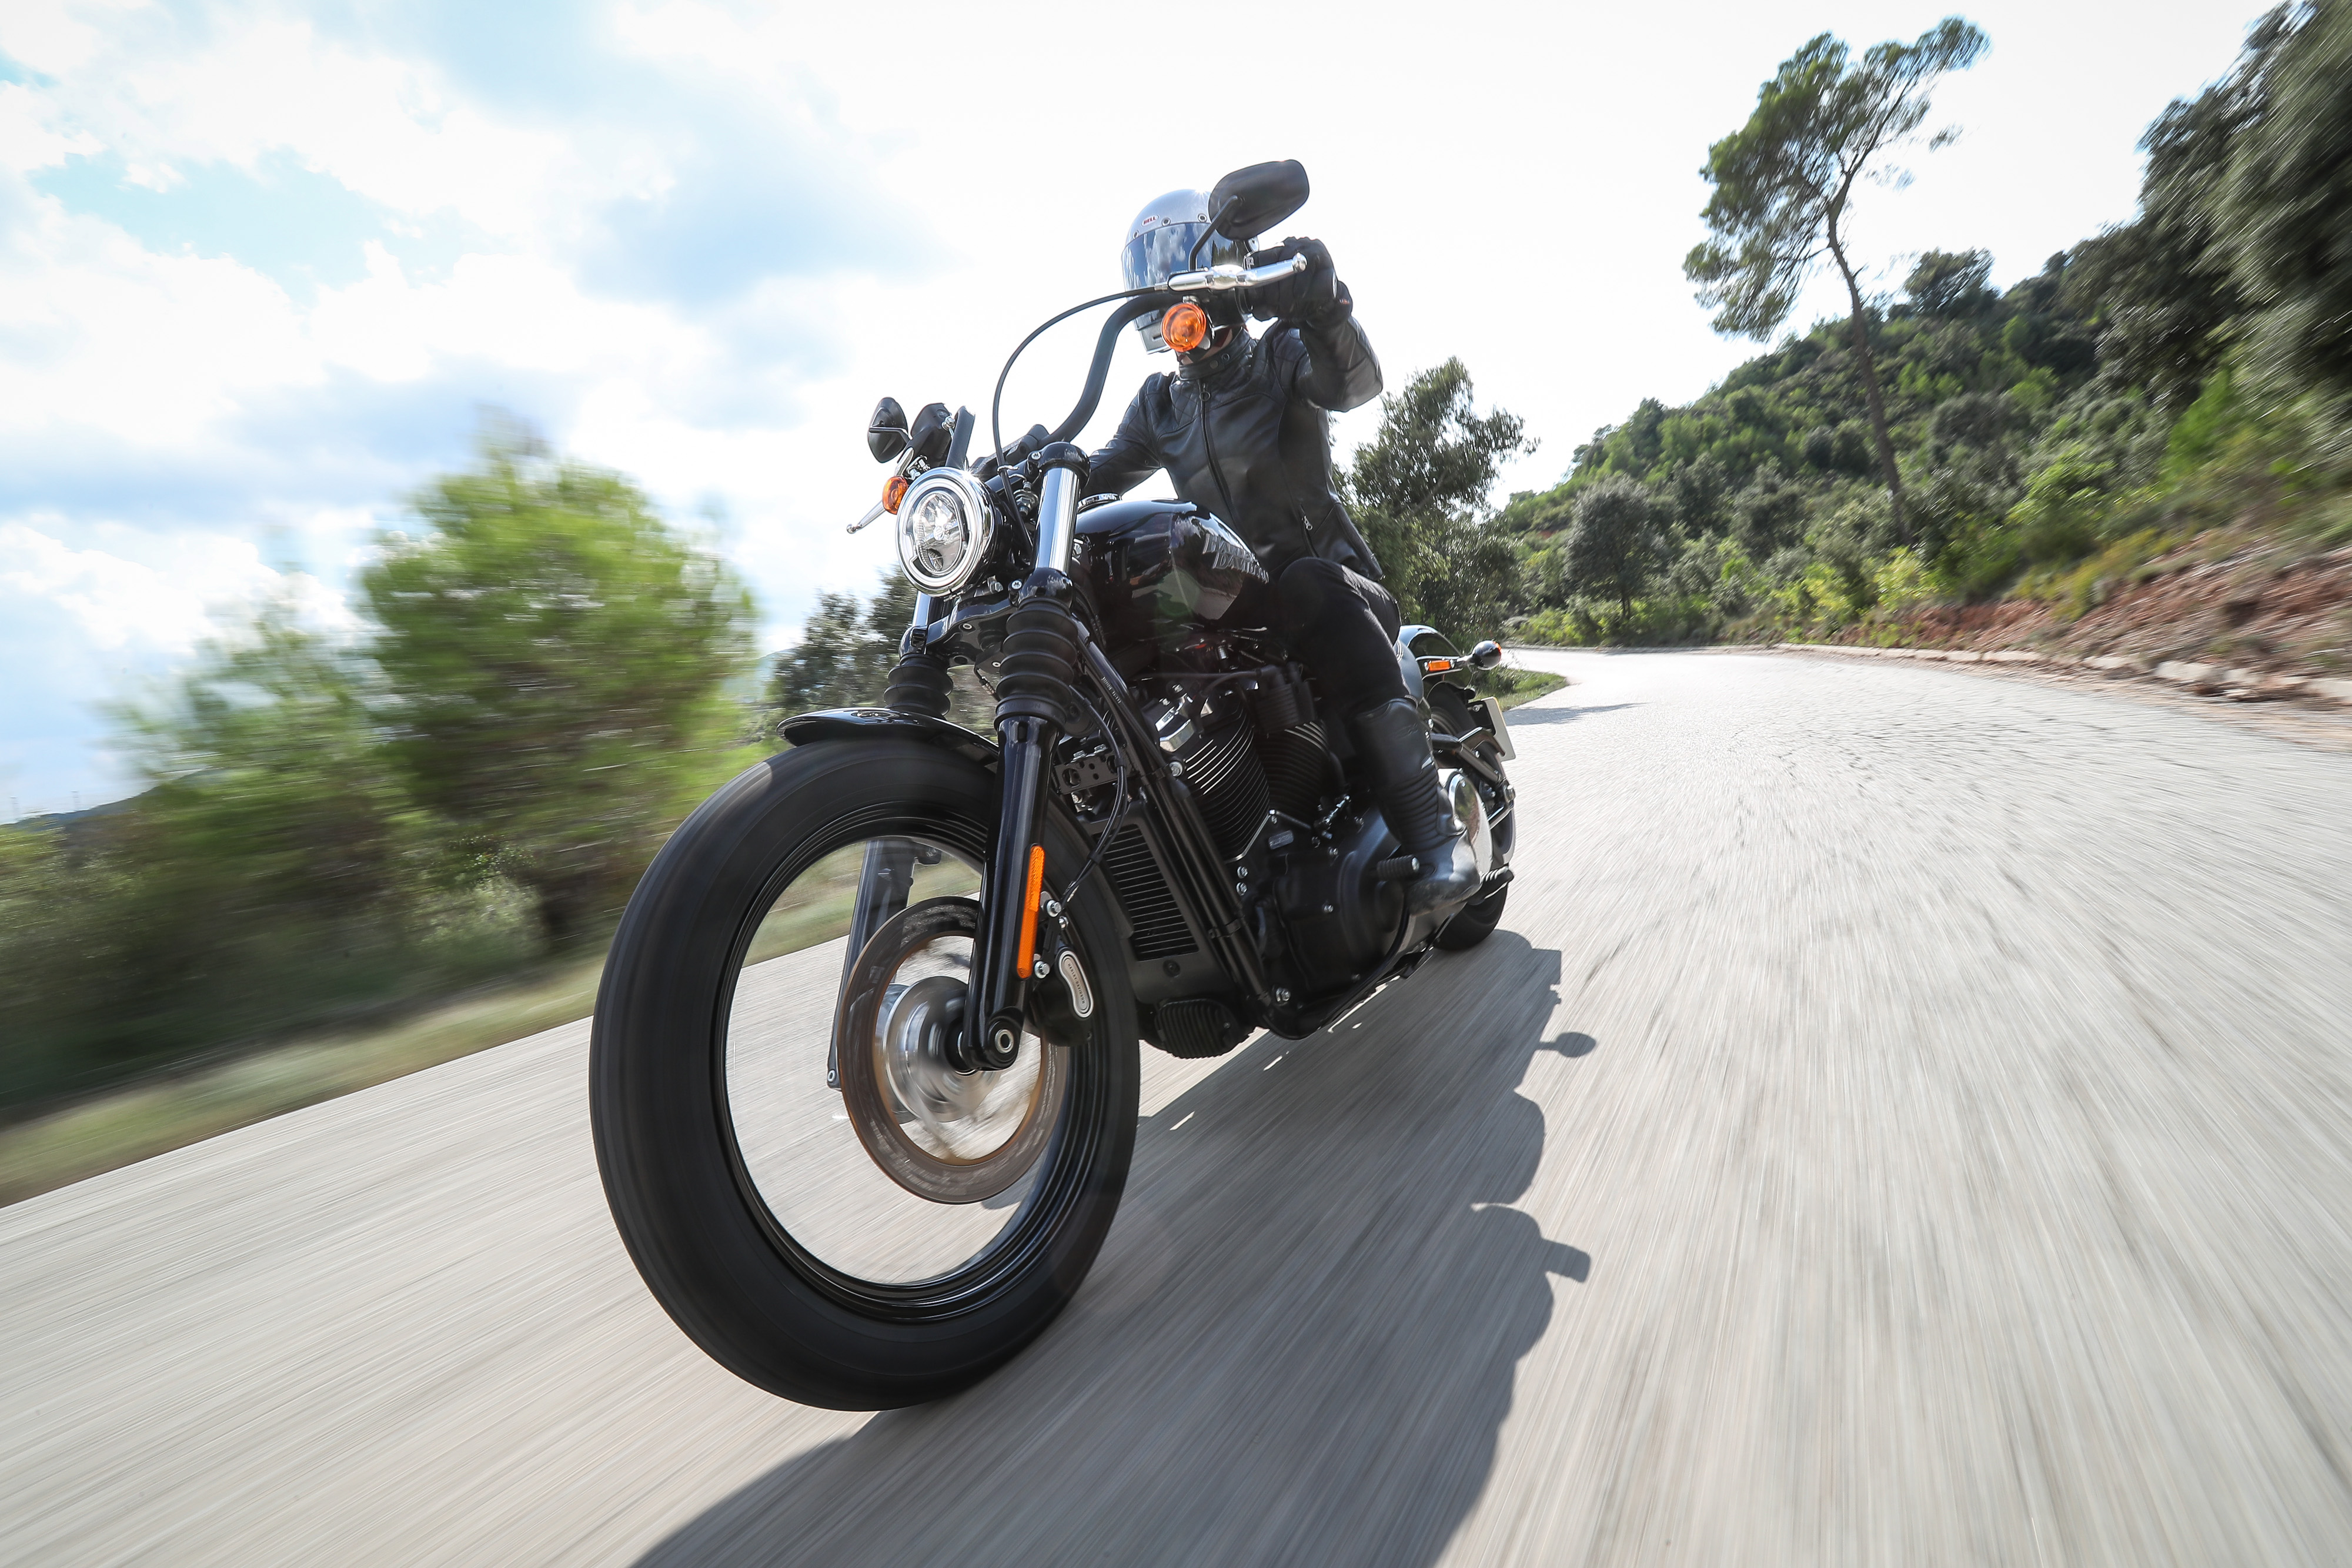 First ride: Harley-Davidson Street Bob 107 review